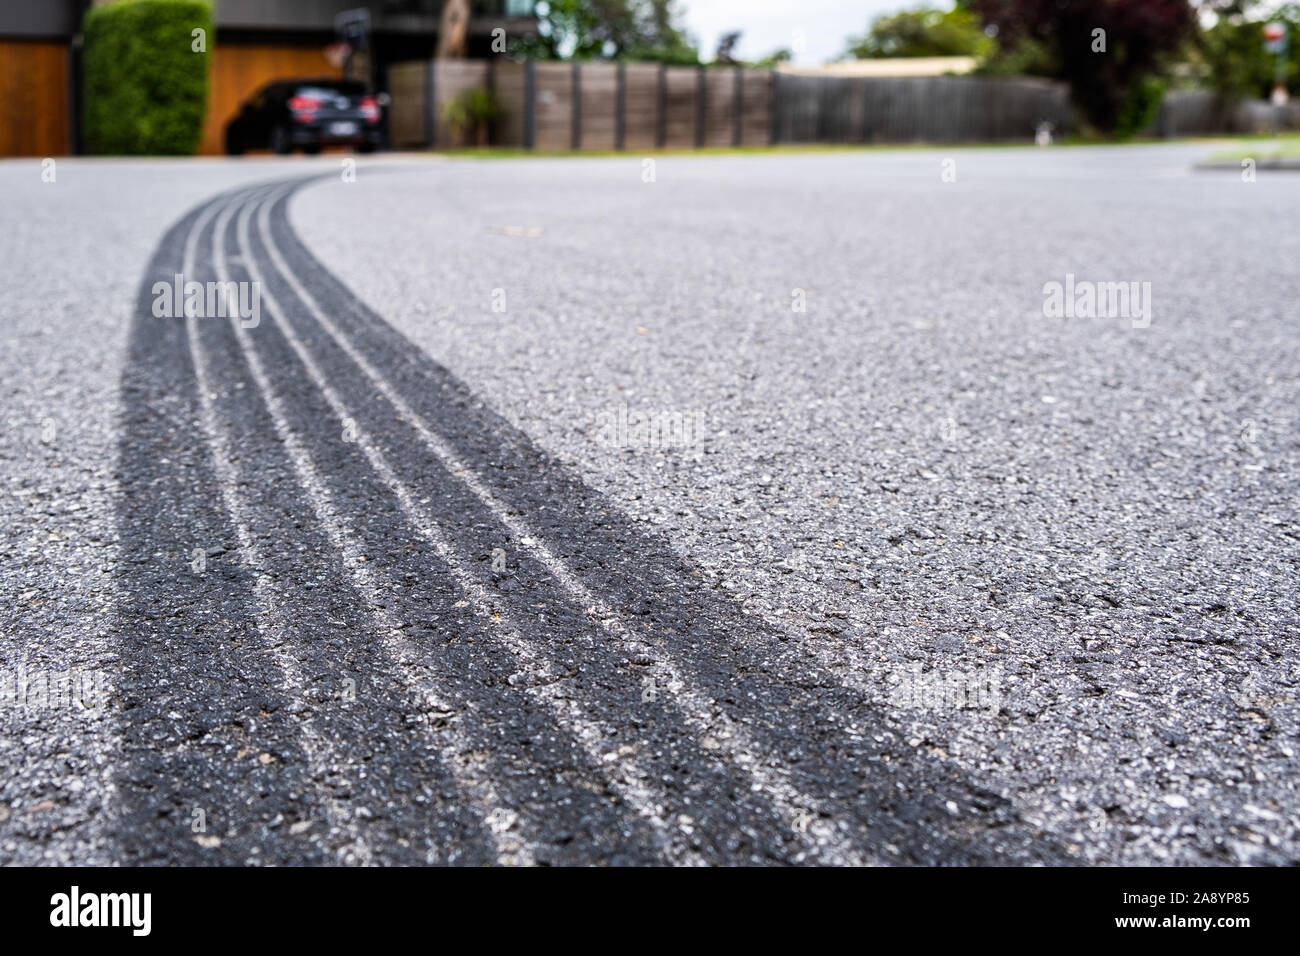 Tyre track on asphalt from hard braking - shallow focus Stock Photo